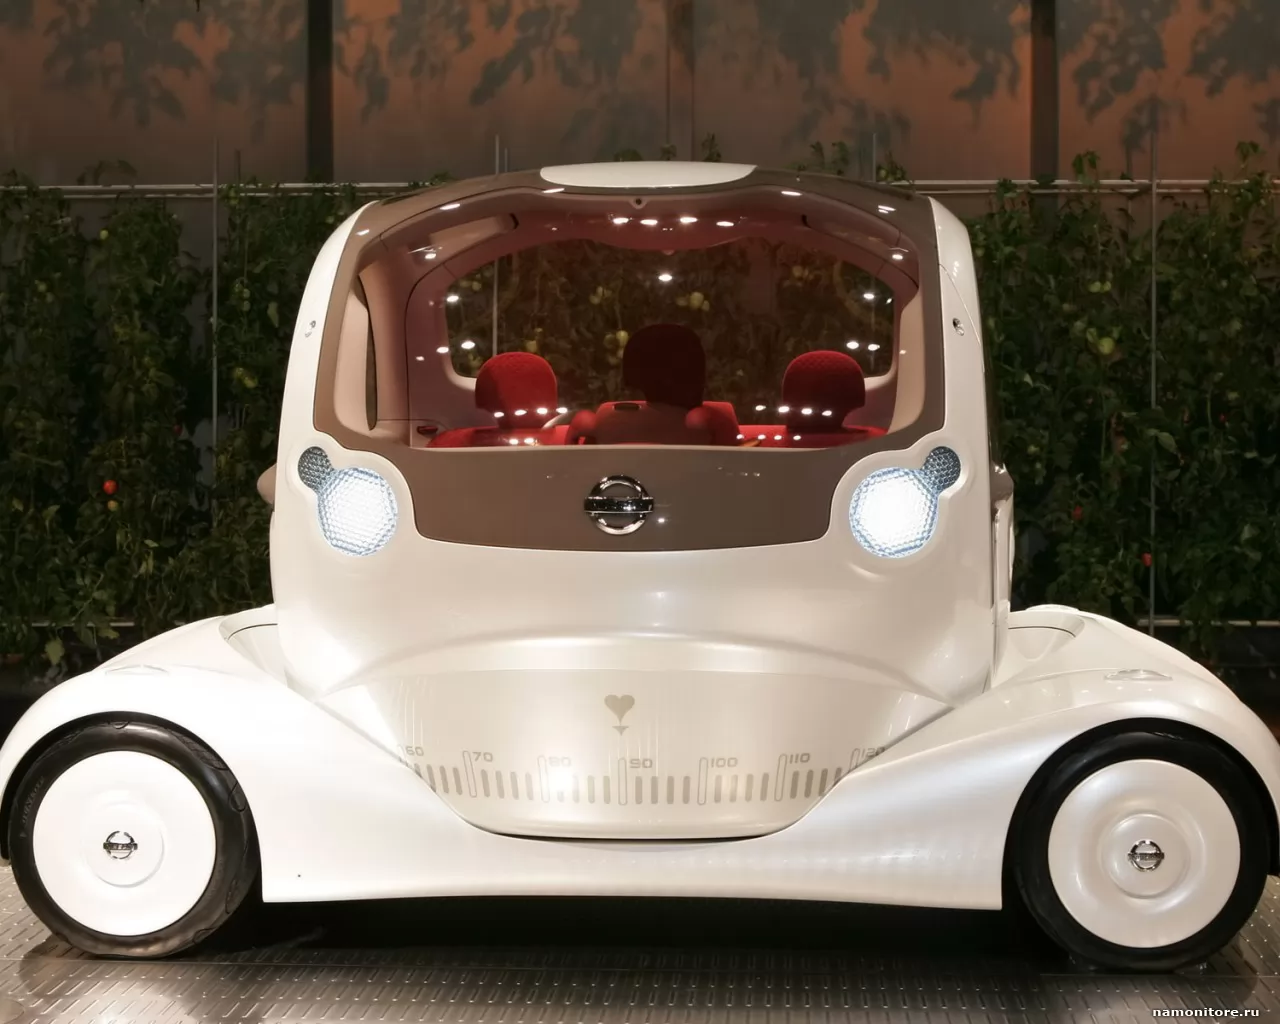 Белый Nissan Pivo-Concept, Nissan, автомобили, белое, концепт, техника х